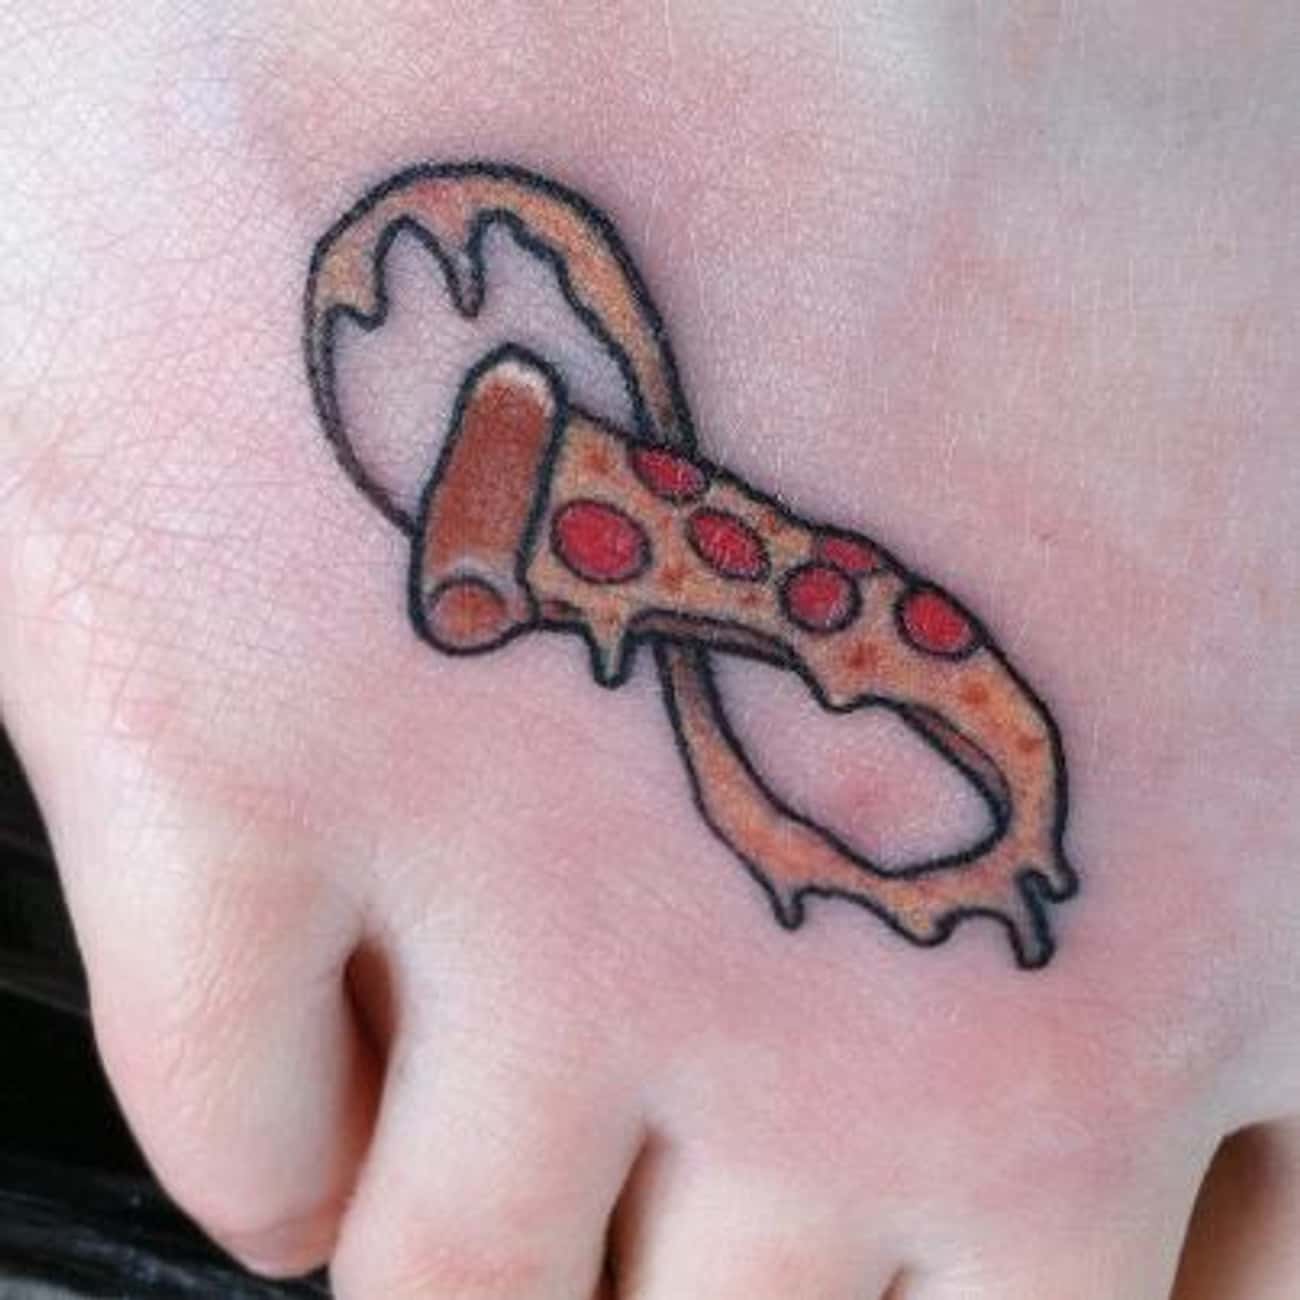 This Infinite Pizza